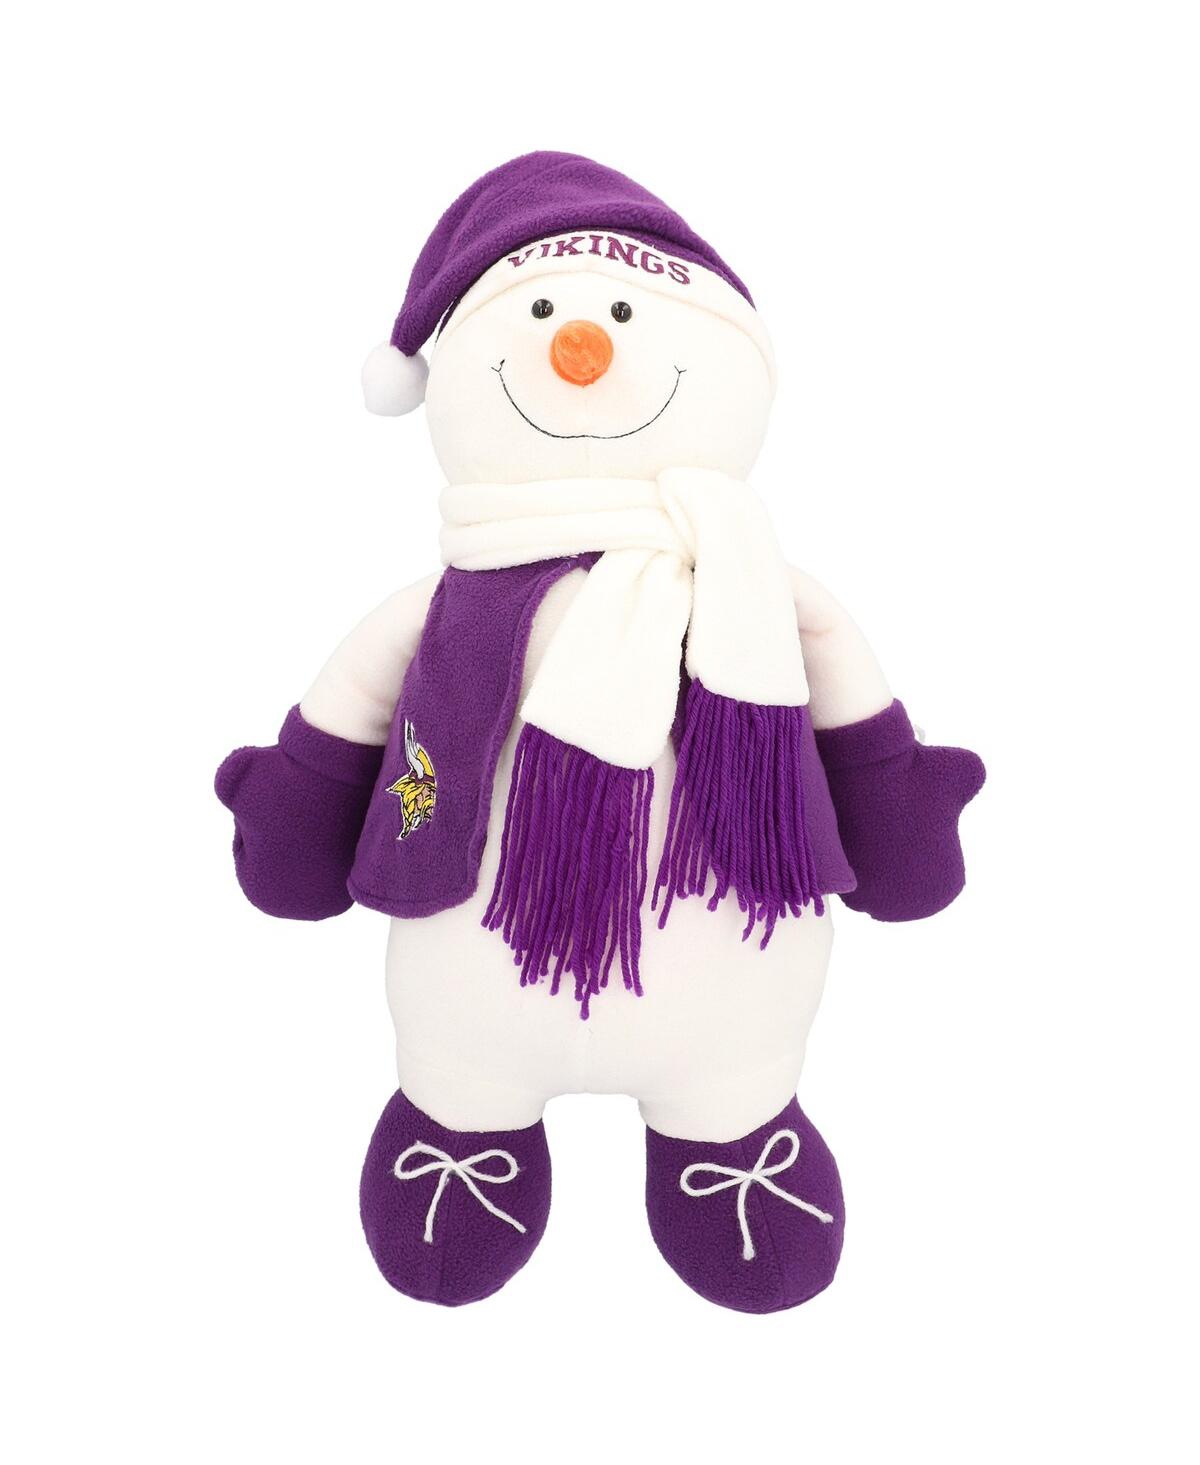 The Memory Company Minnesota Vikings 17" Frosty Snowman Mascot - White, Purple